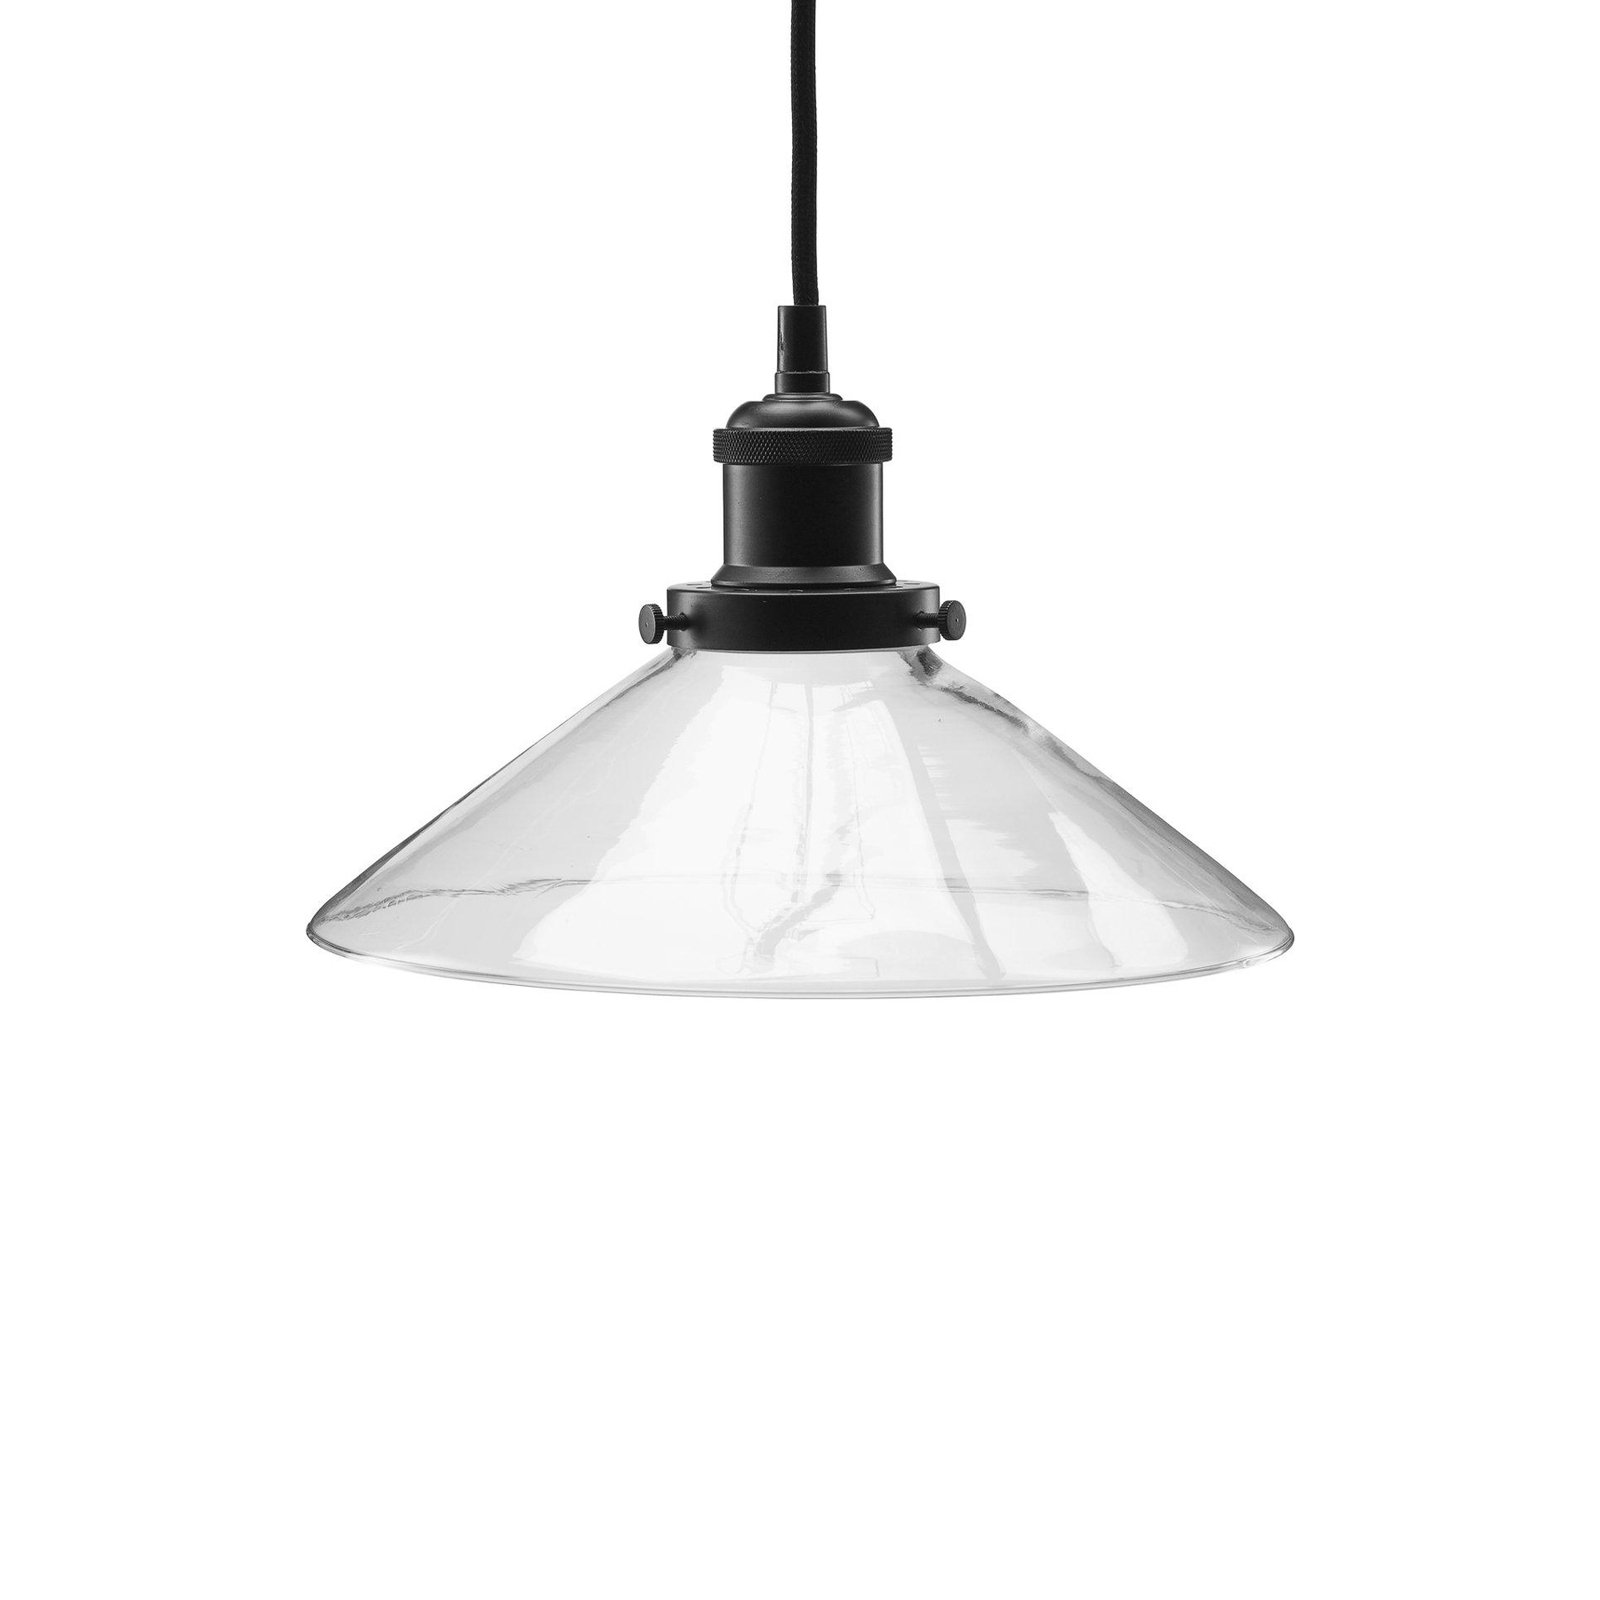 PR Home hanglamp August, helder, Ø 25 cm